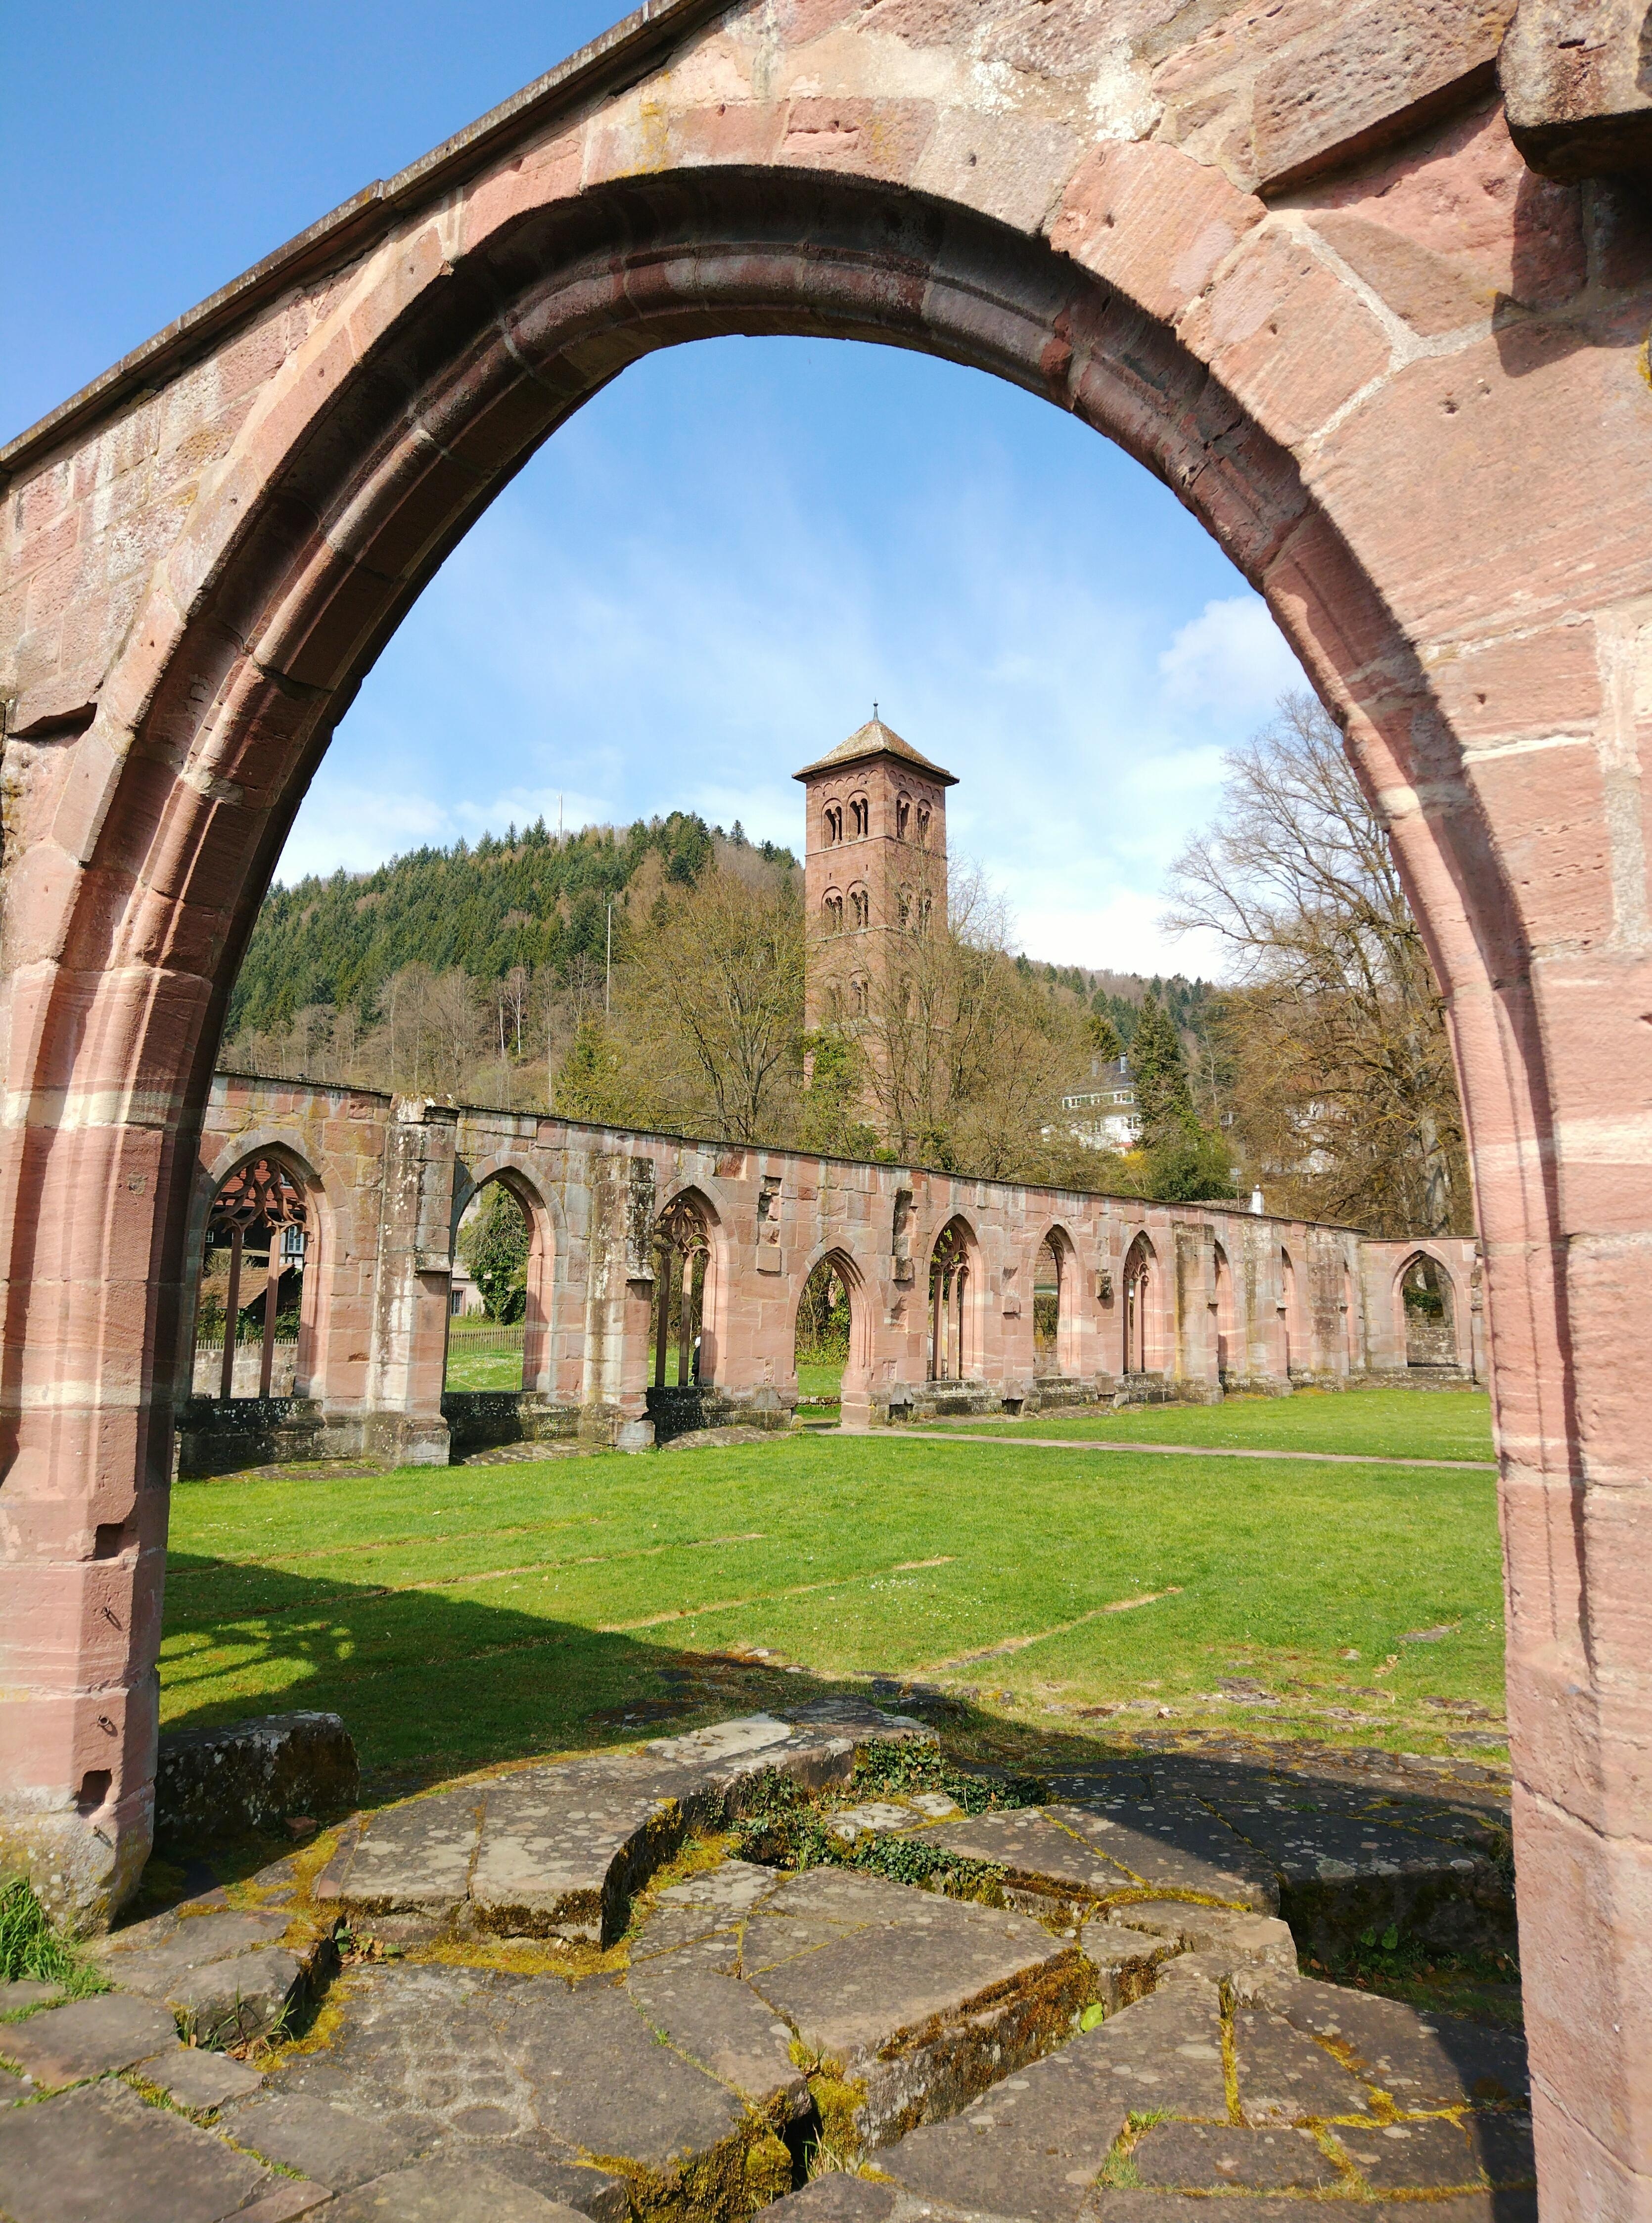 Kloster Hirsau
#klosterhirsau #ruinen #turm #hirsau